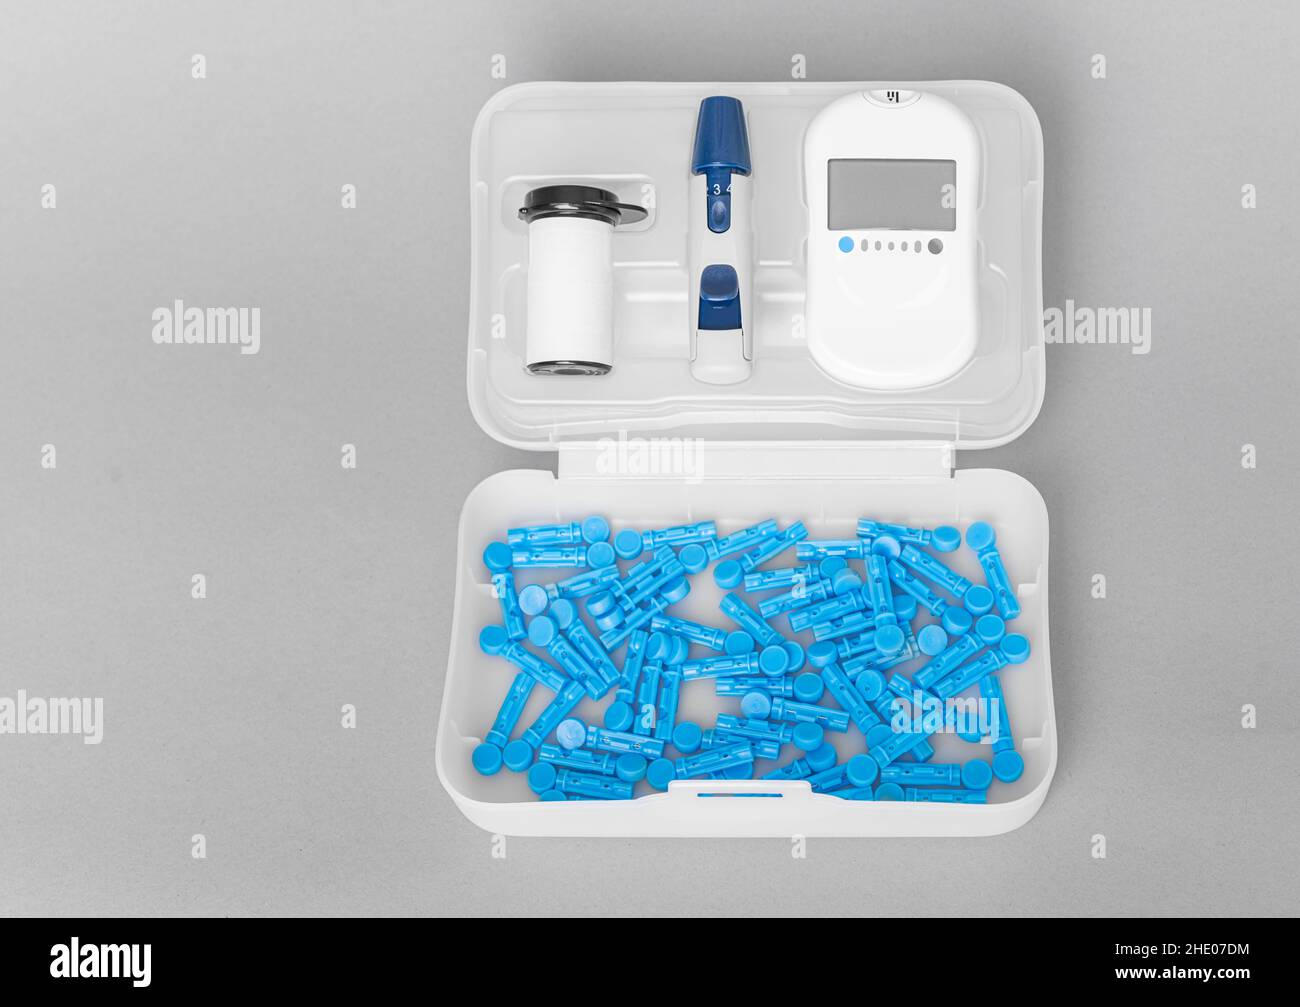 Glucometer, home kit for measuring blood sugar. Stock Photo